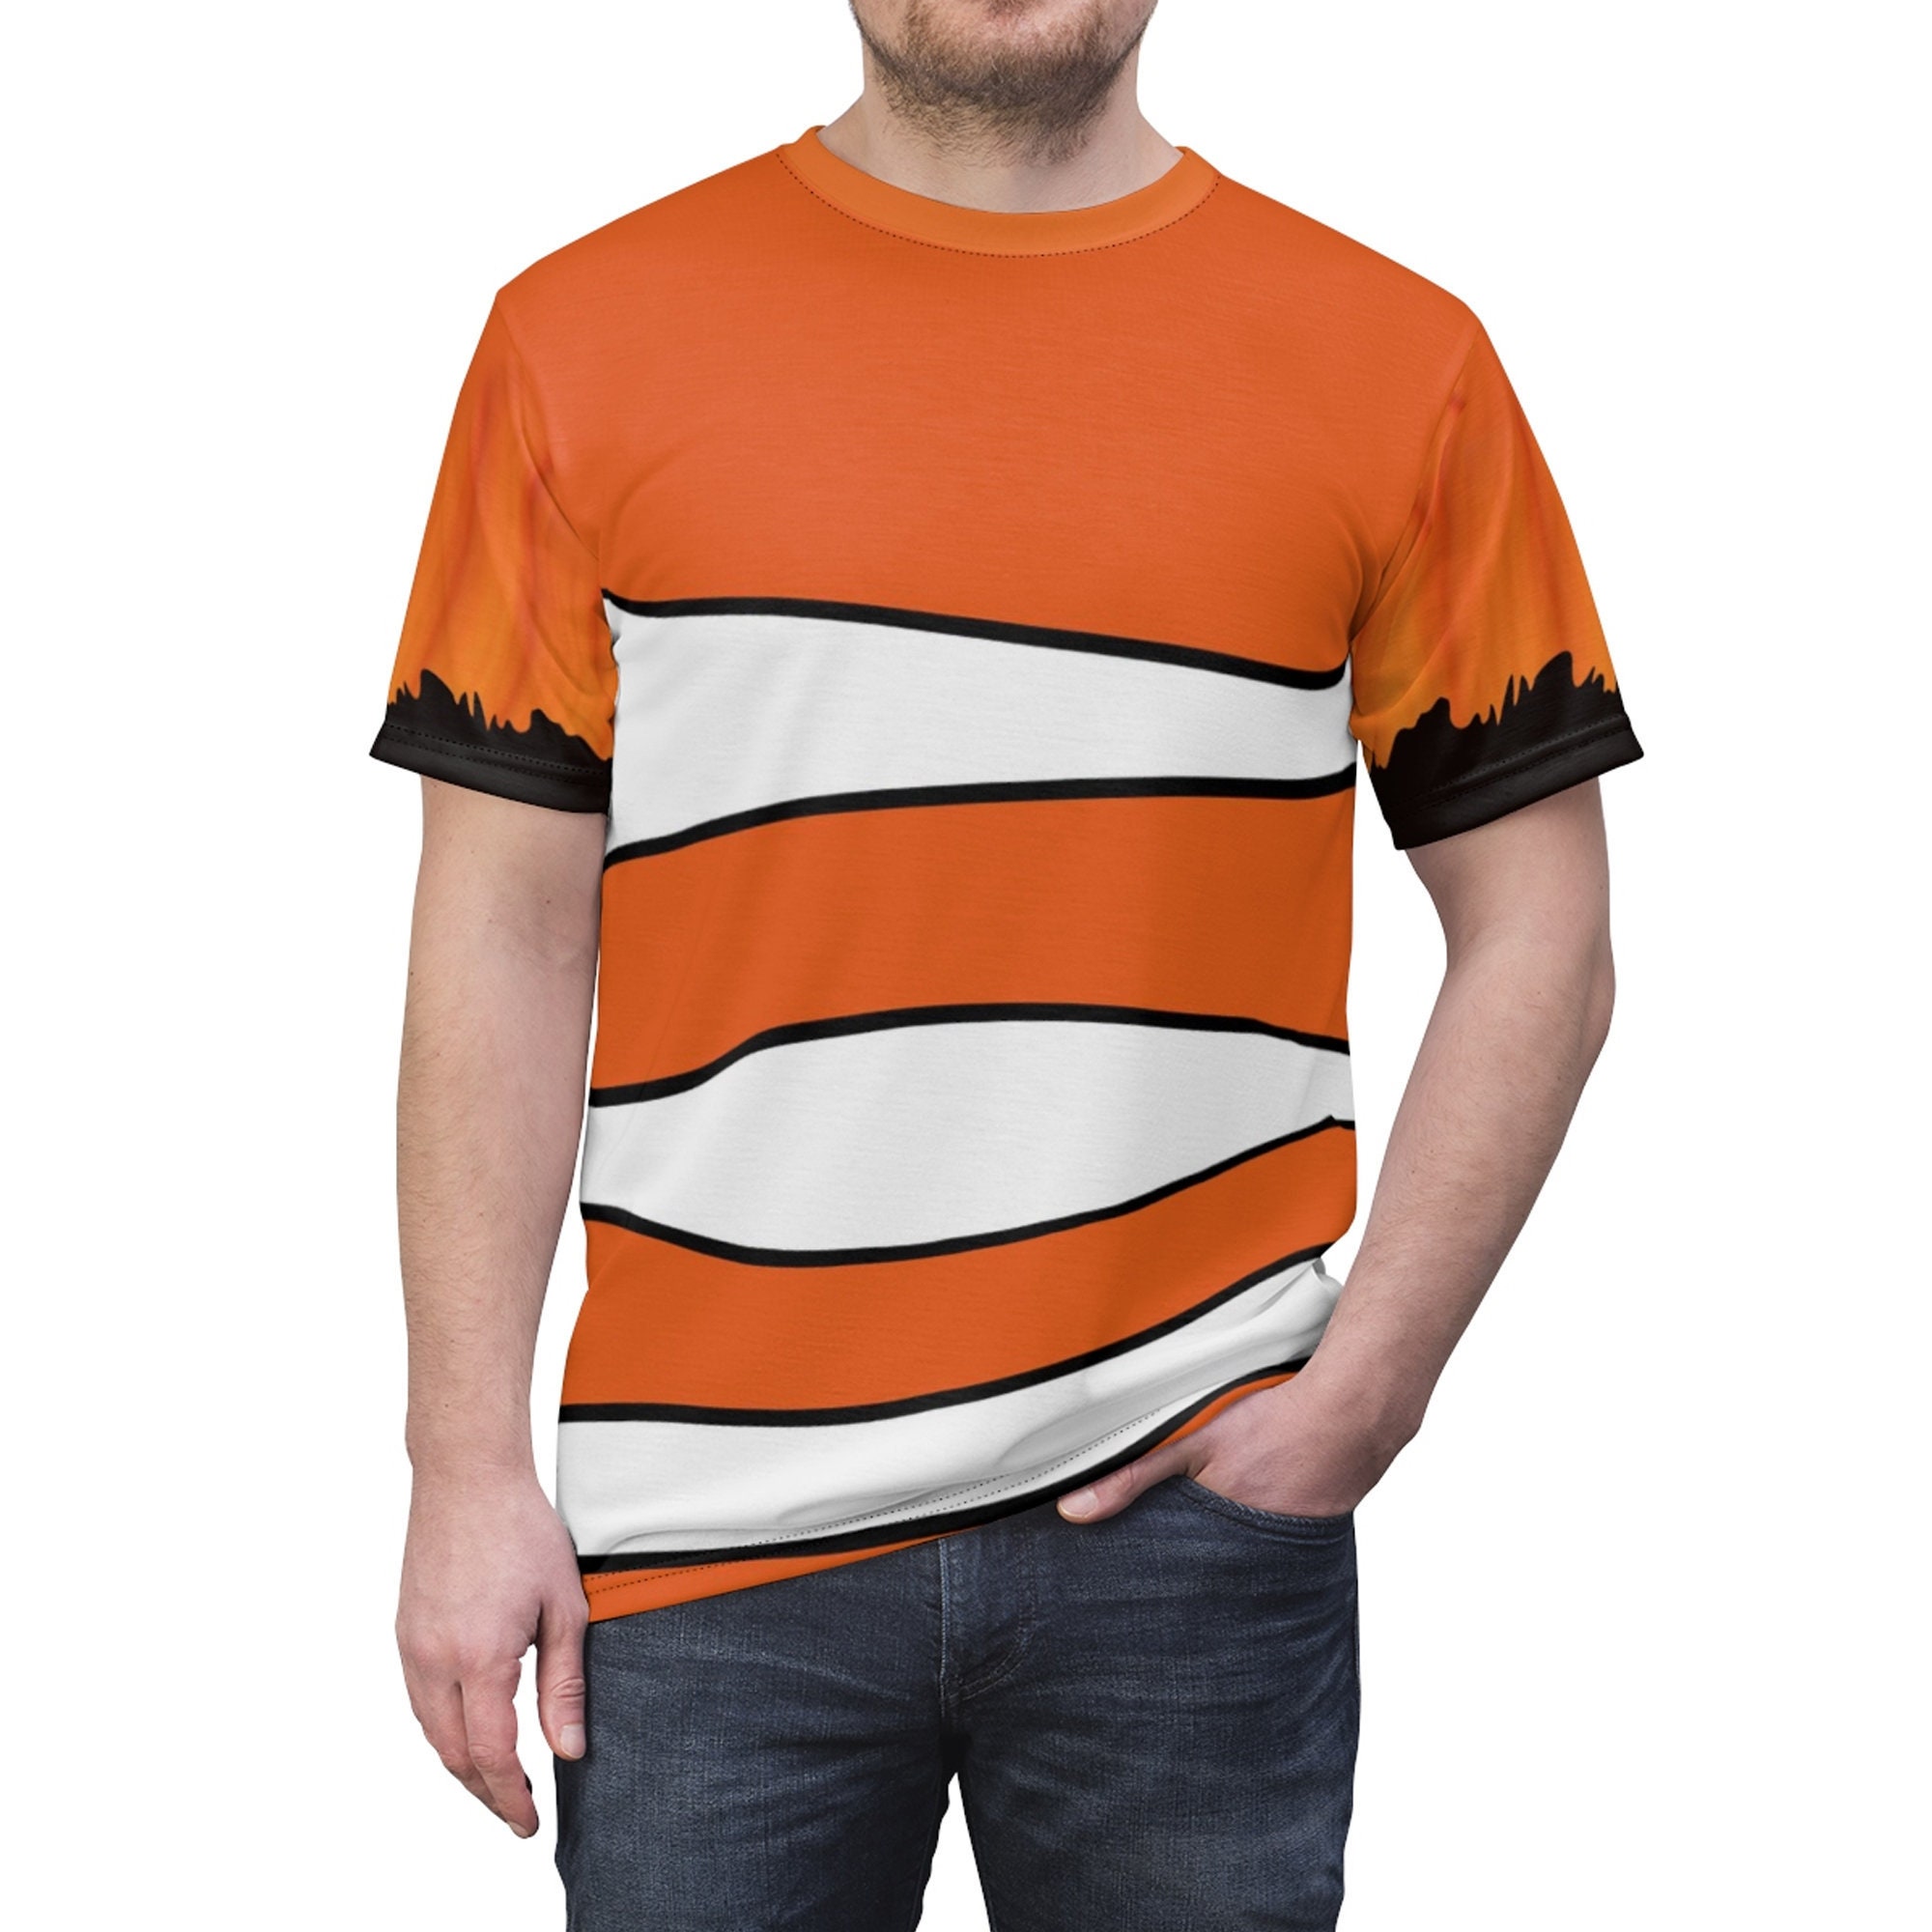 Marlin Unisex Shirt Finding Nemo Costume Inspired